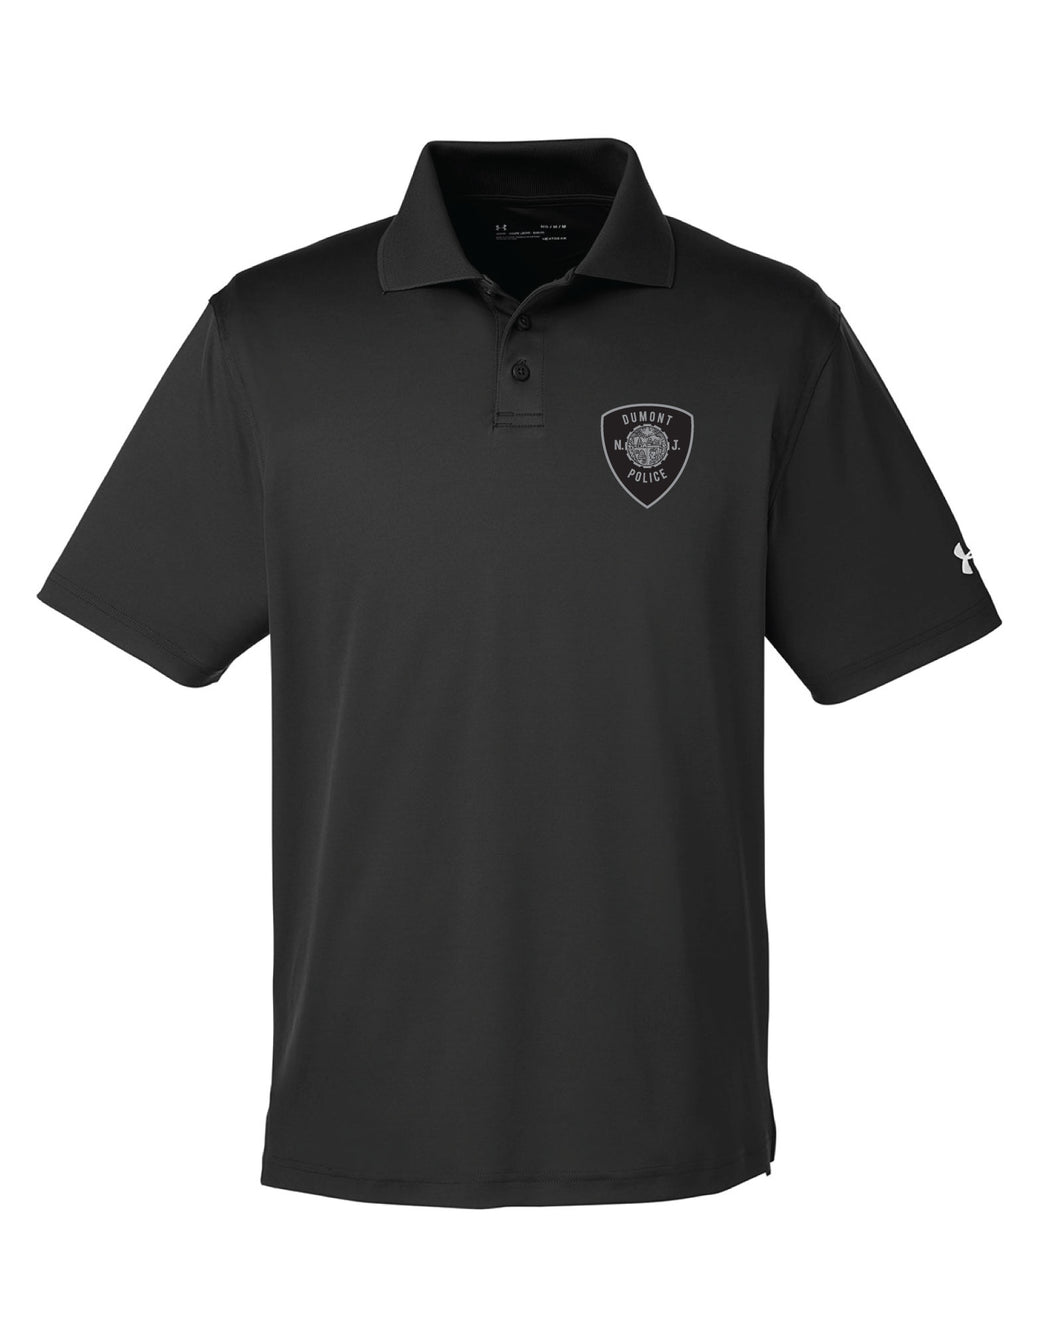 Dumont Police Under Armour Polo Shirt - Black (Design 3) - 5KounT